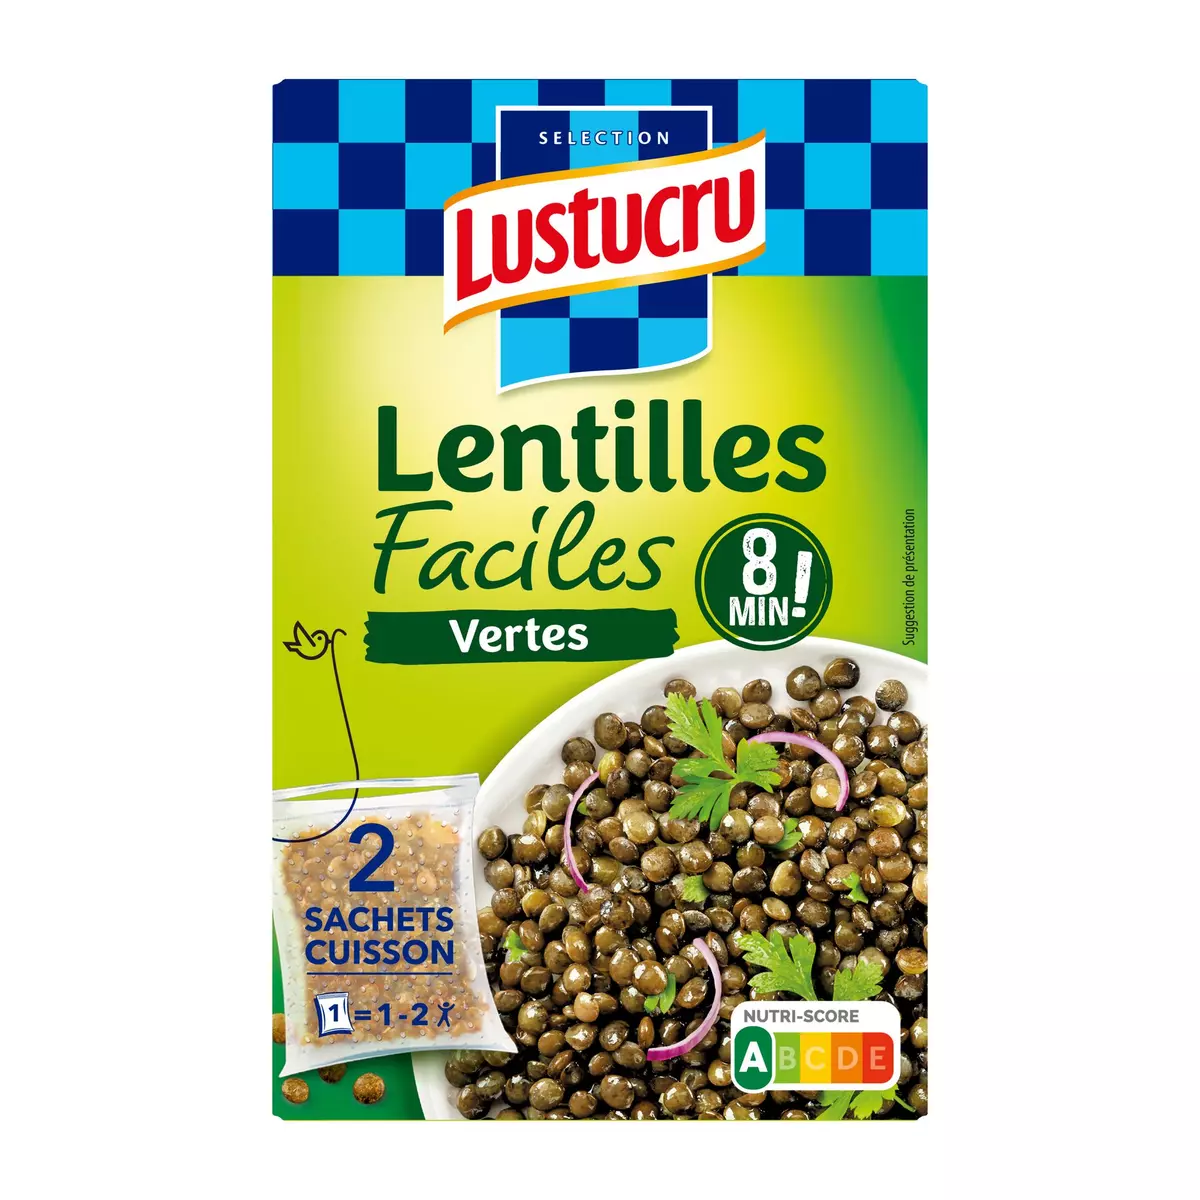 LUSTUCRU Lentilles vertes faciles 2 sachets 300g